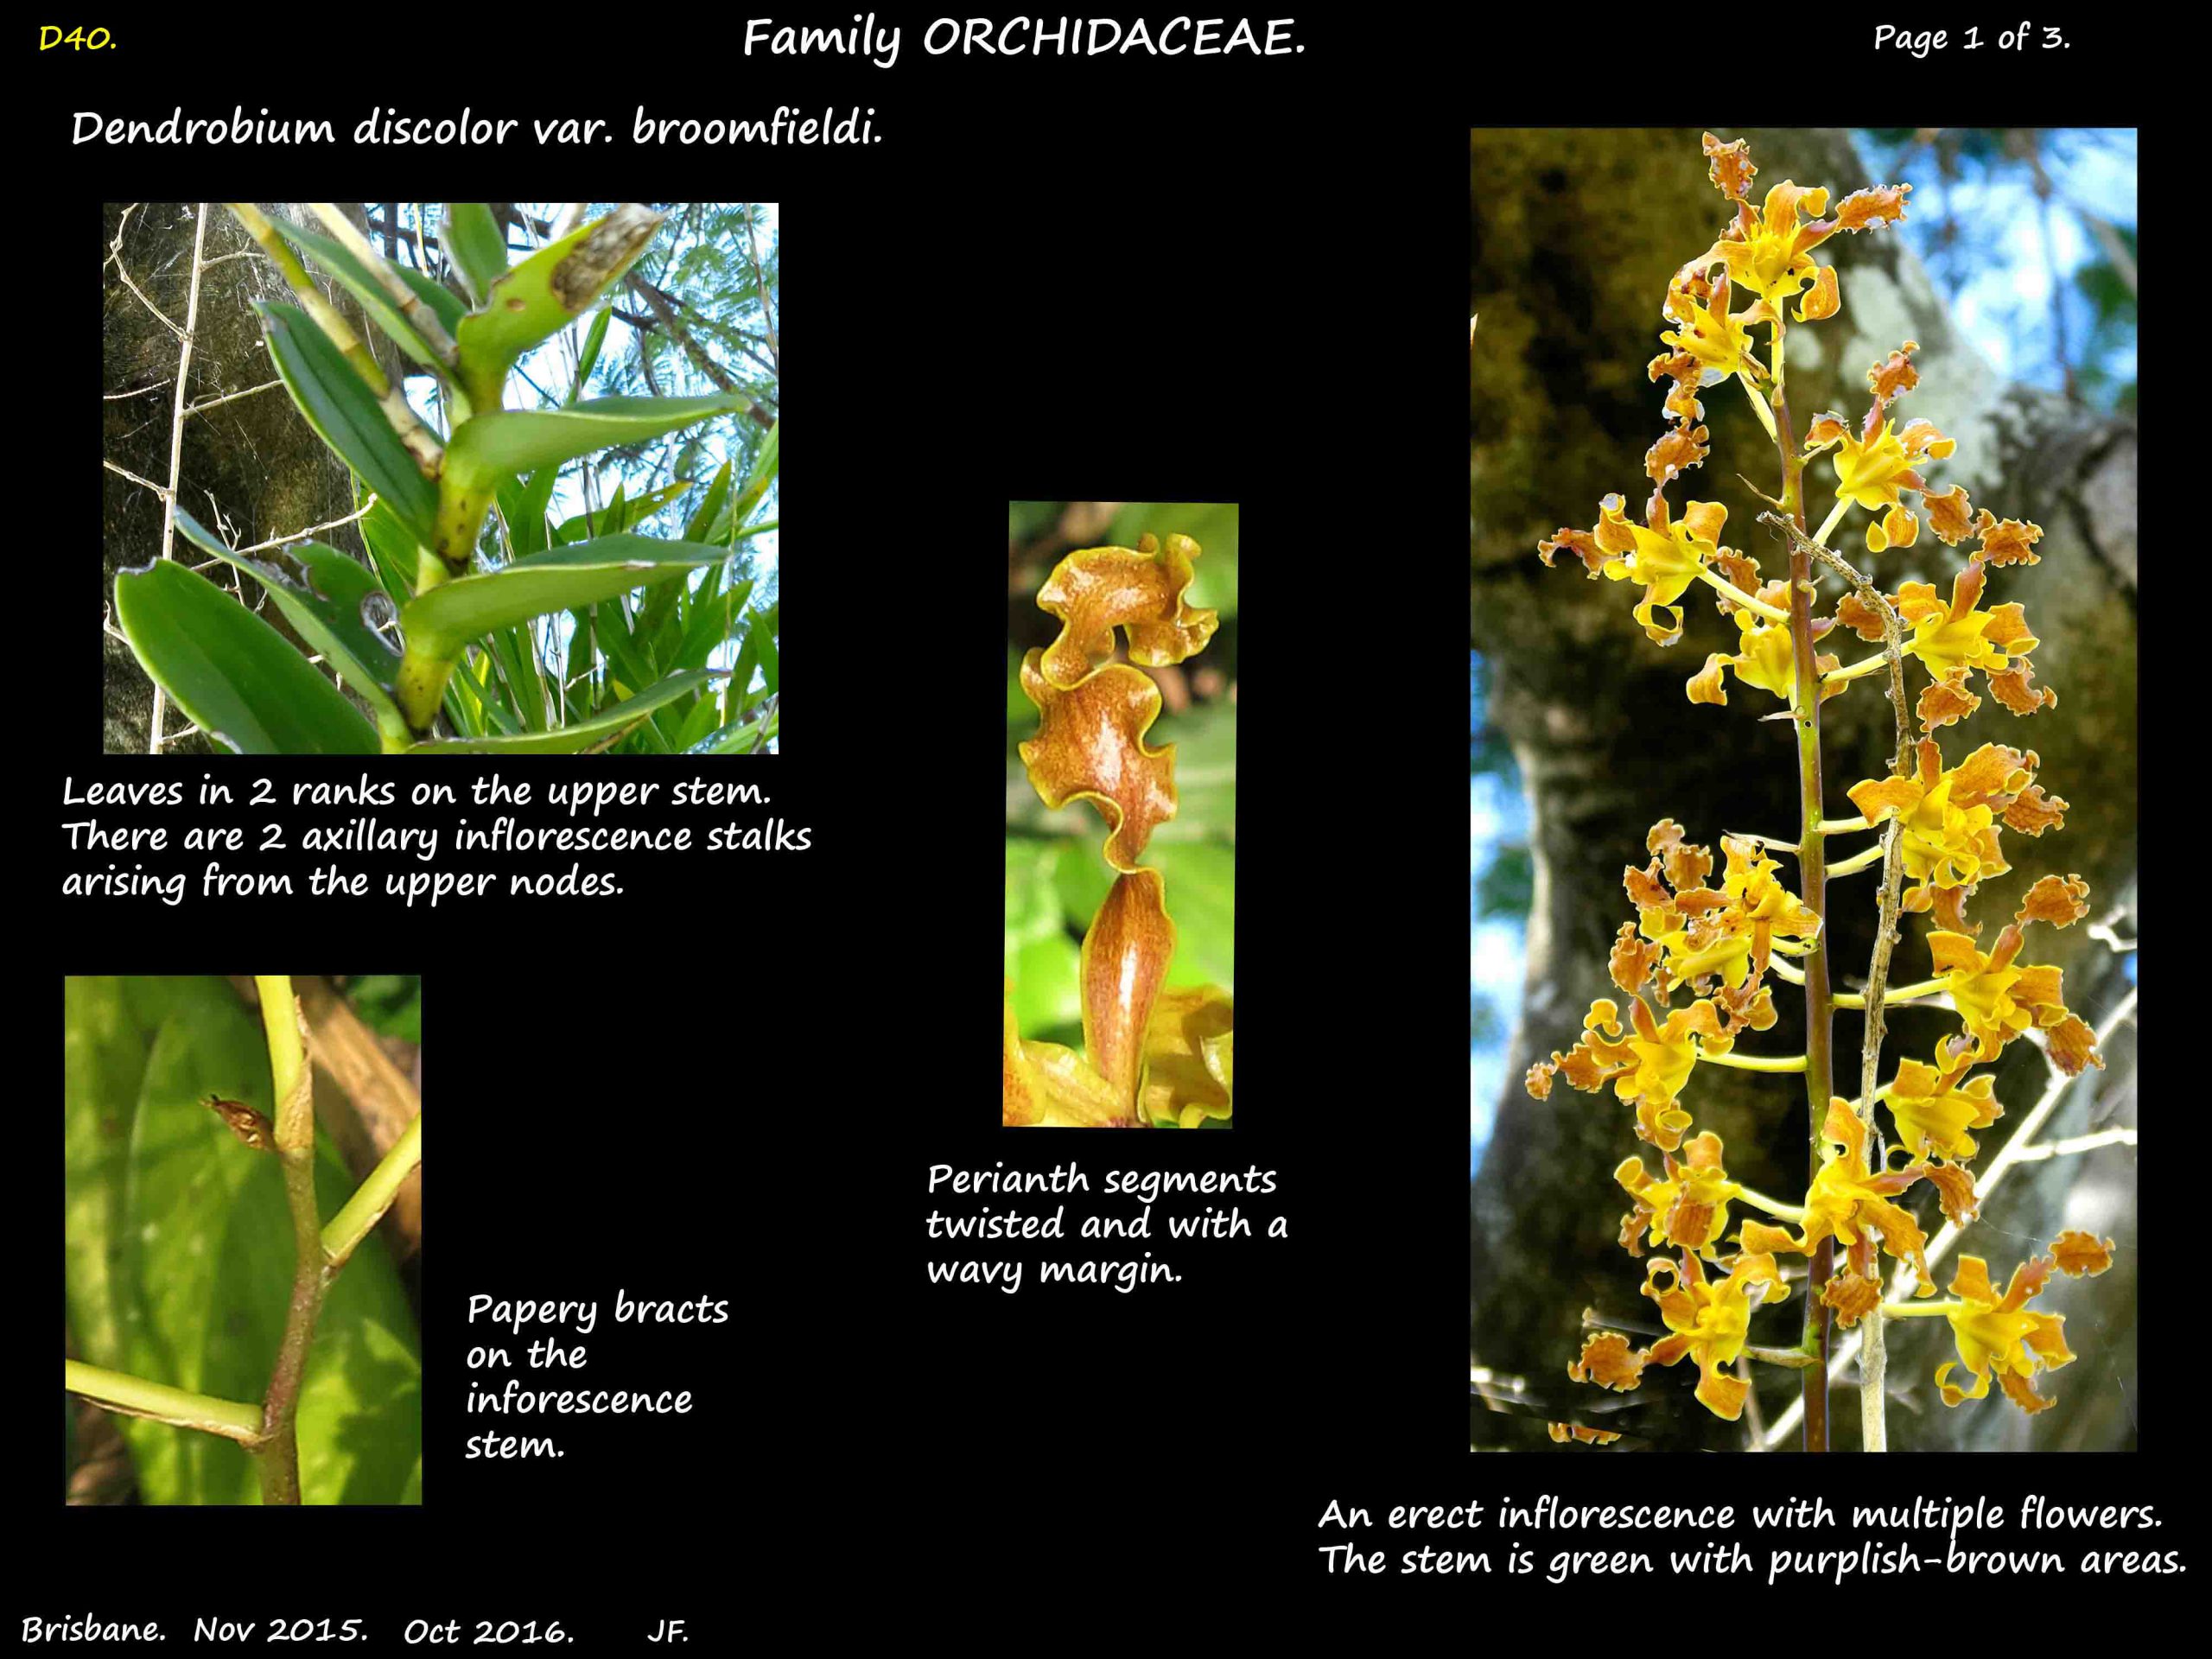 1 Dendrobium discolor leaves